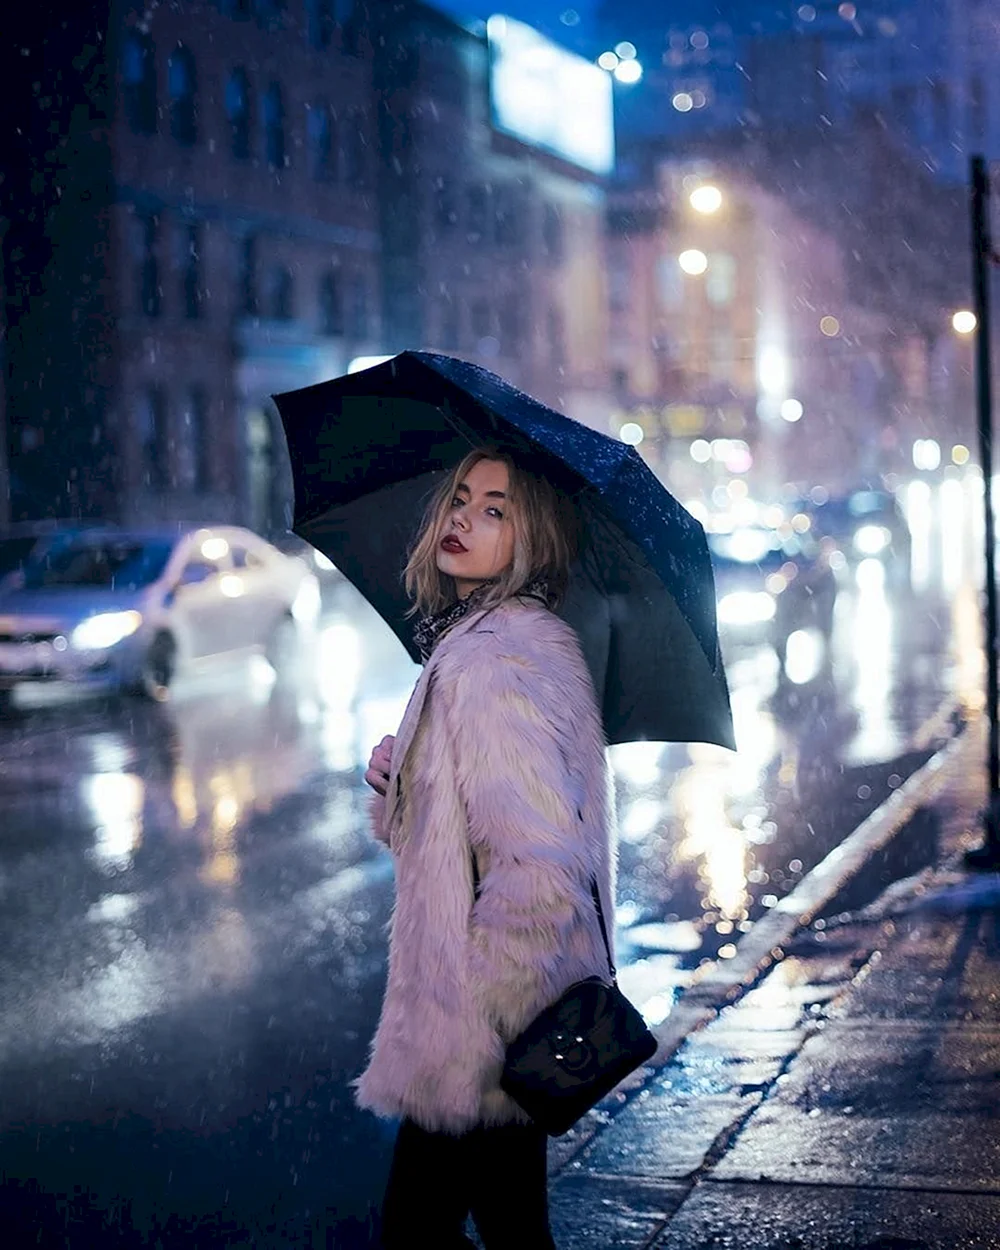 Rain Umbrella Photoshoot